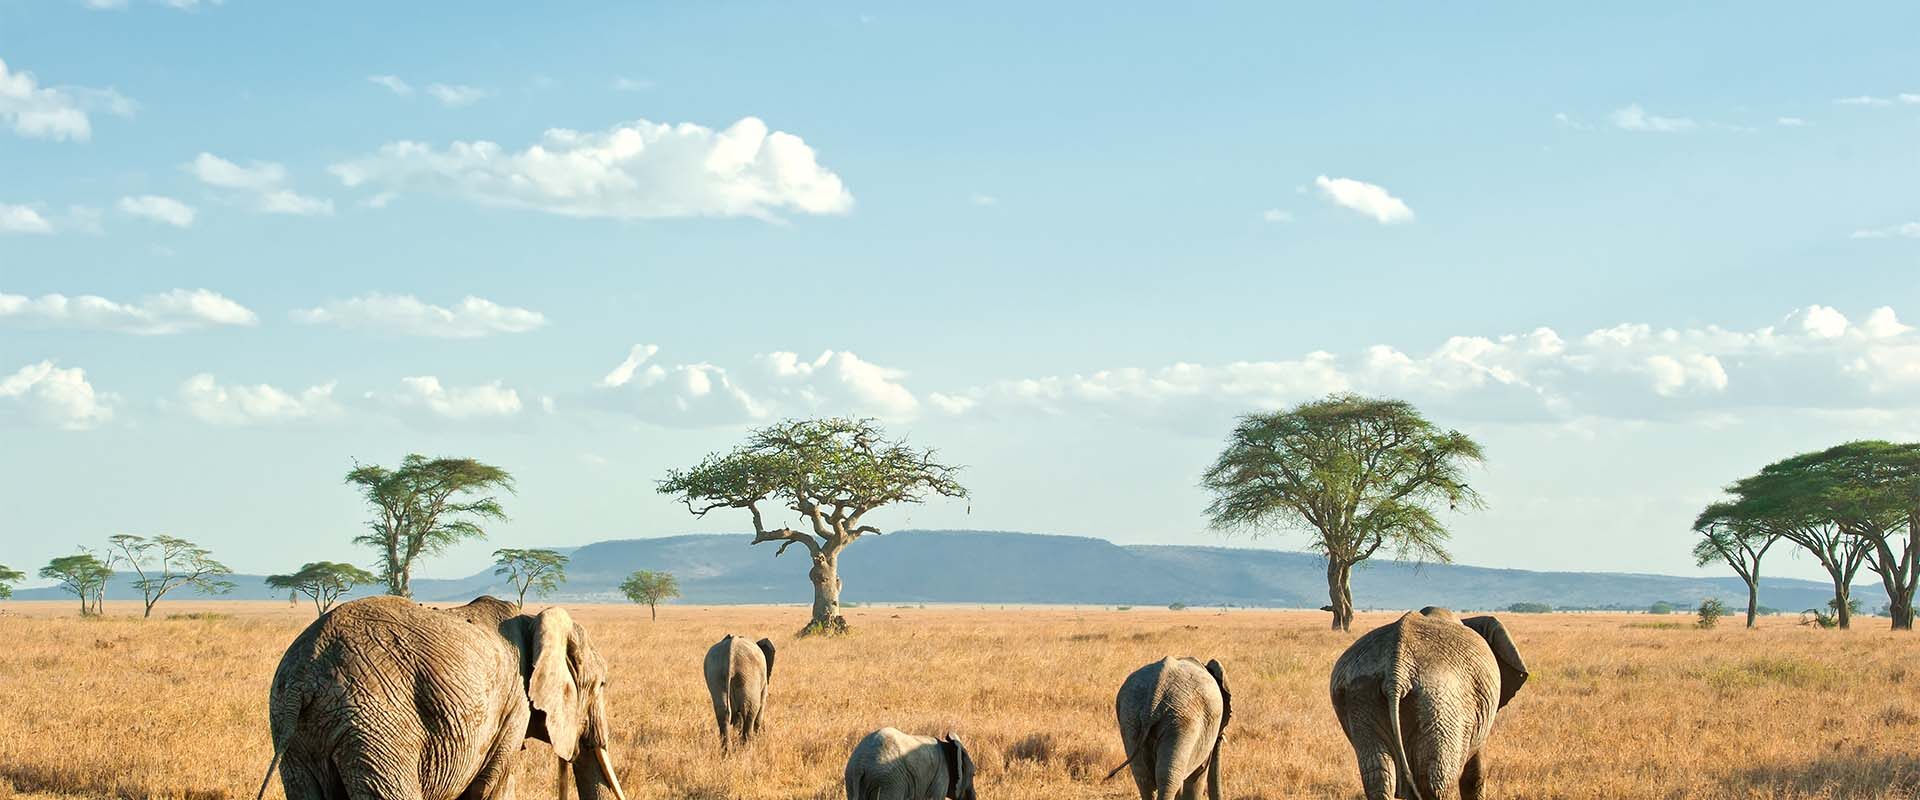 Elefantenherde in einem Nationalpark in Tansania